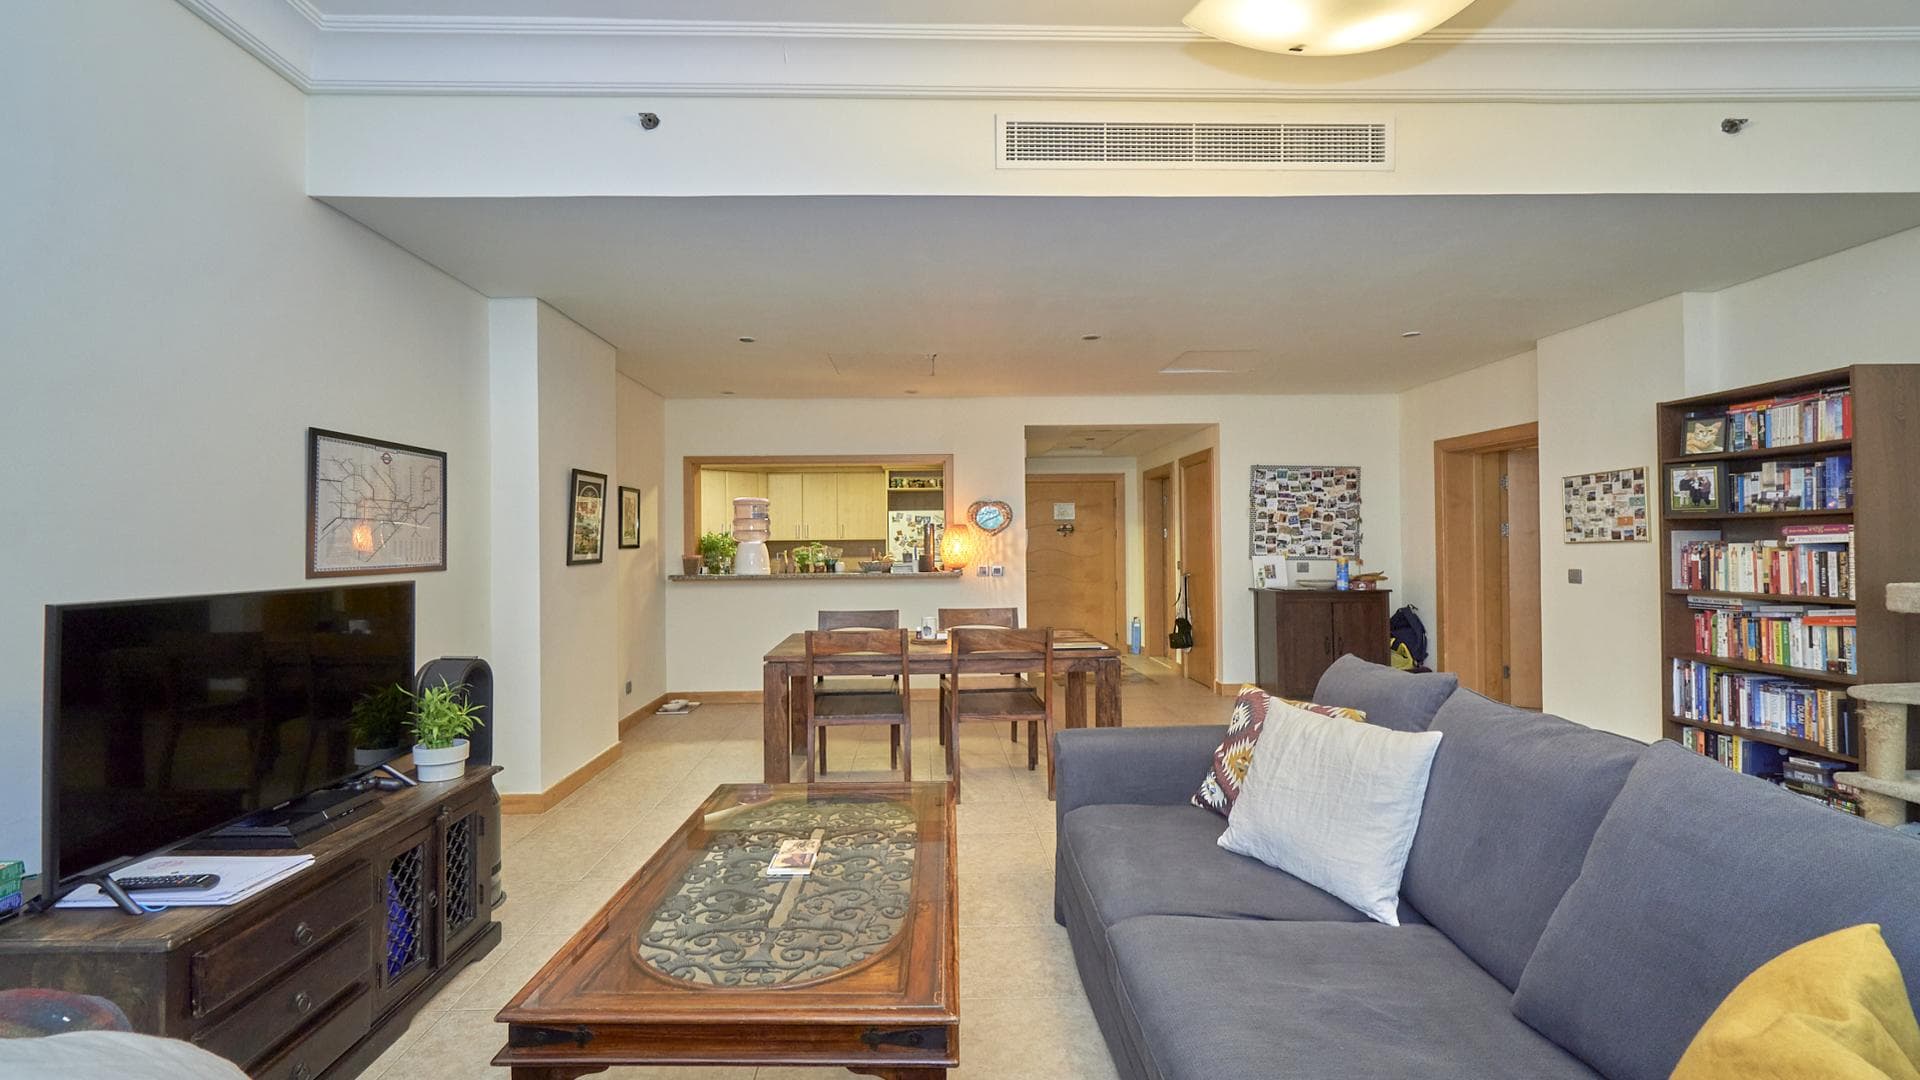 1 Bedroom Apartment For Sale Al Sheraa Tower Lp36737 31ec29882eadc20.jpg